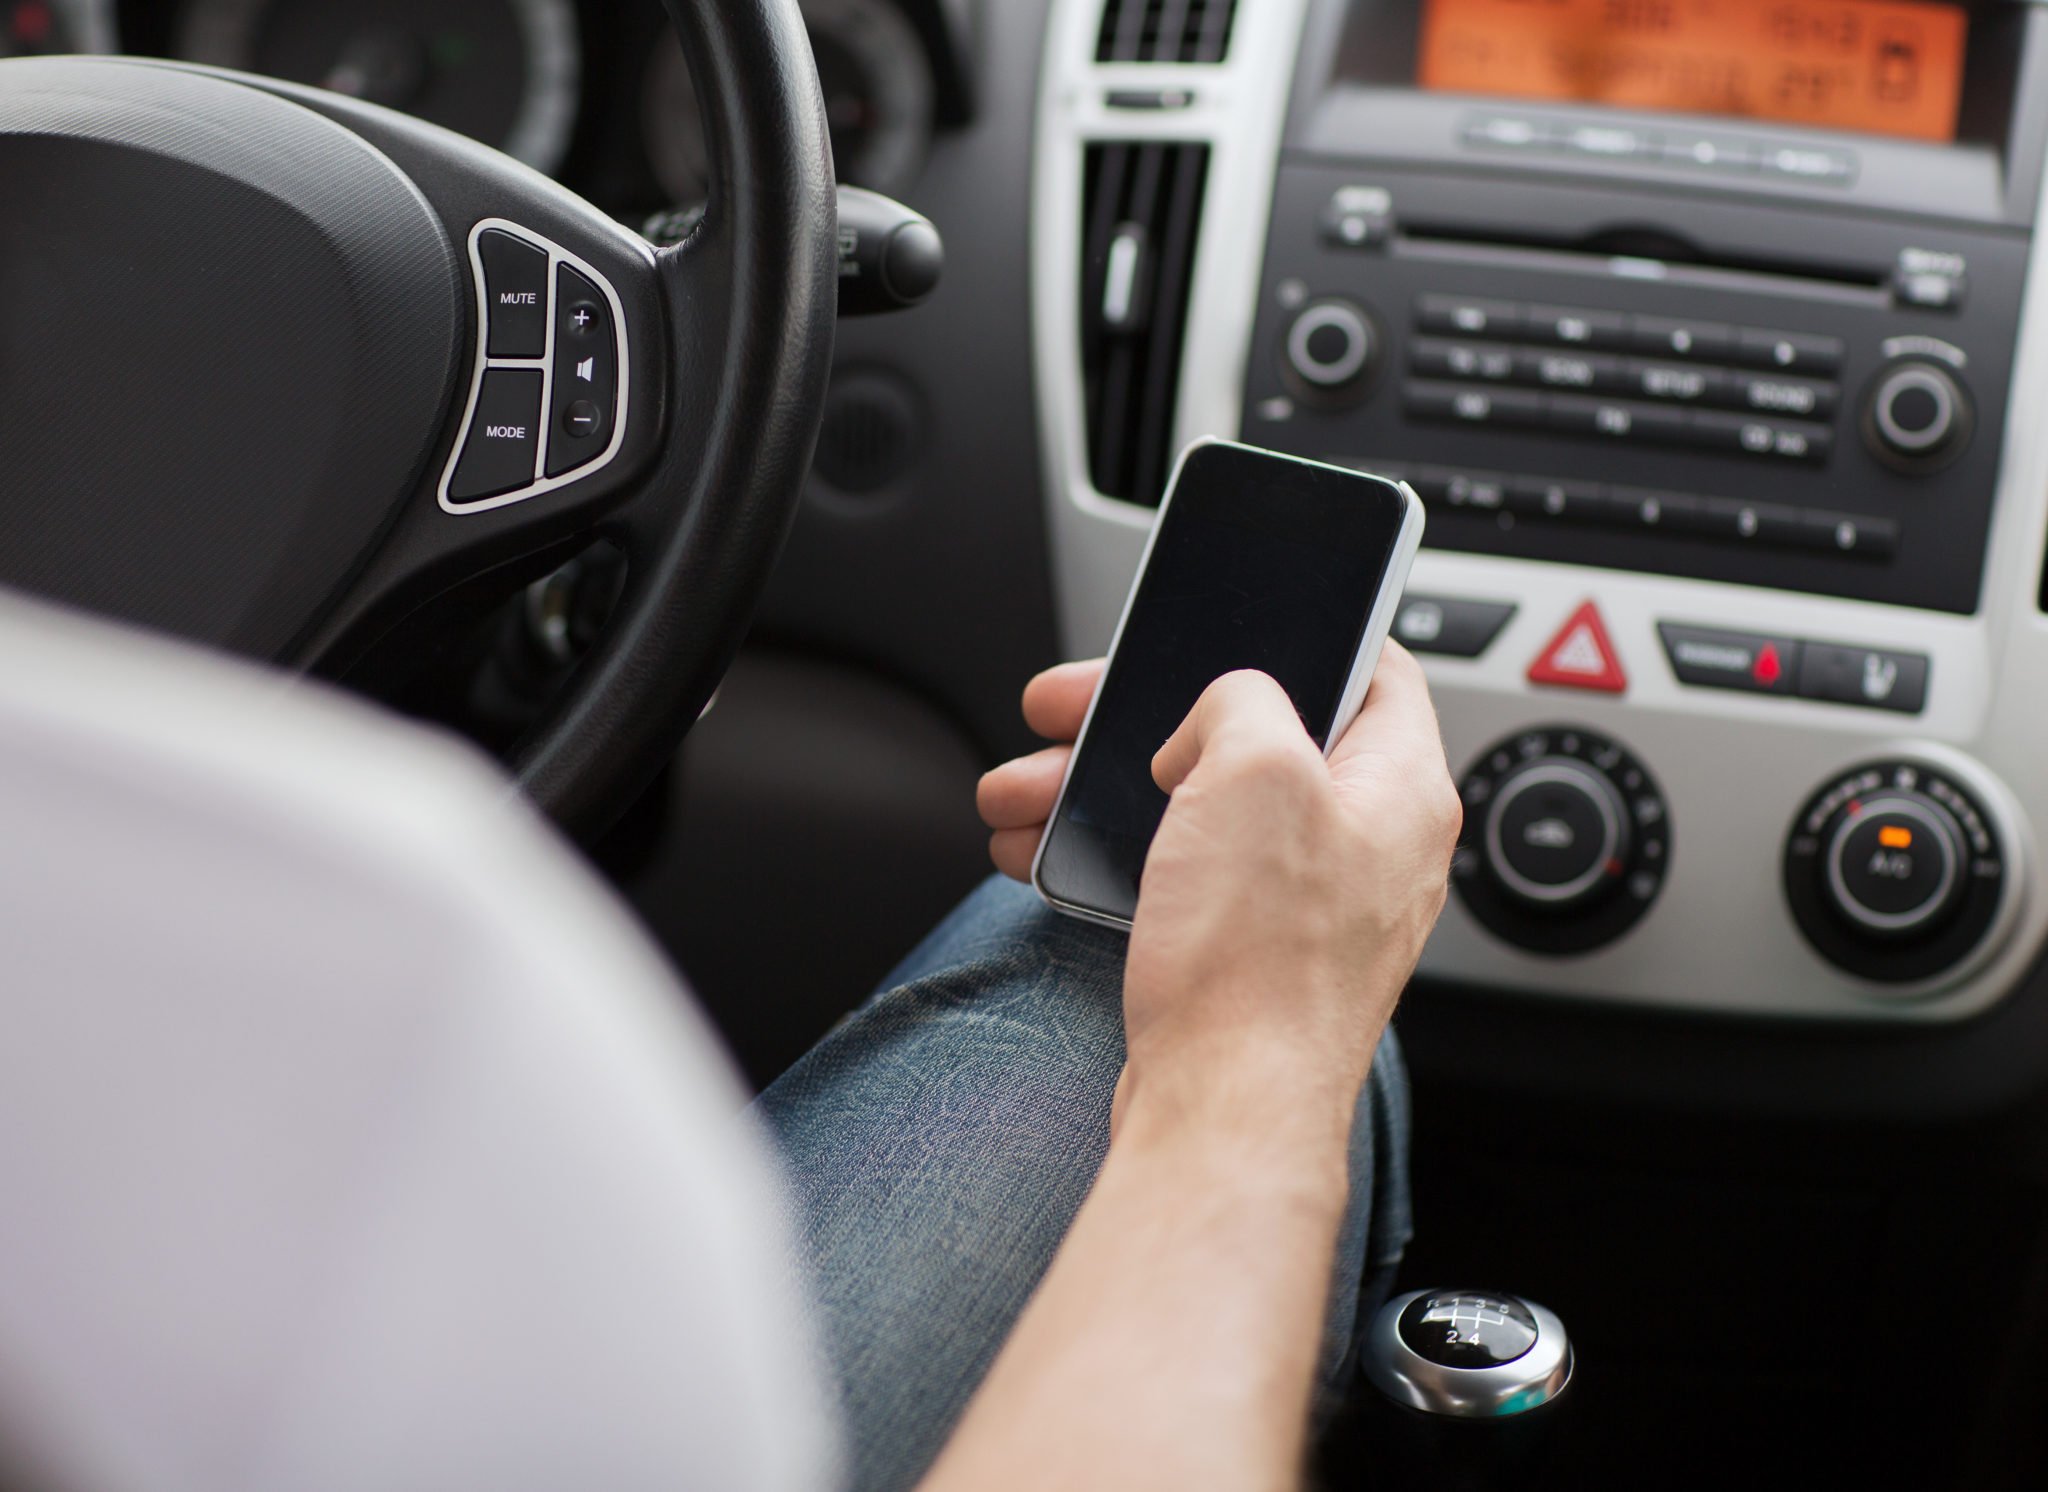 Driver using smartphone image via Shutterstock.